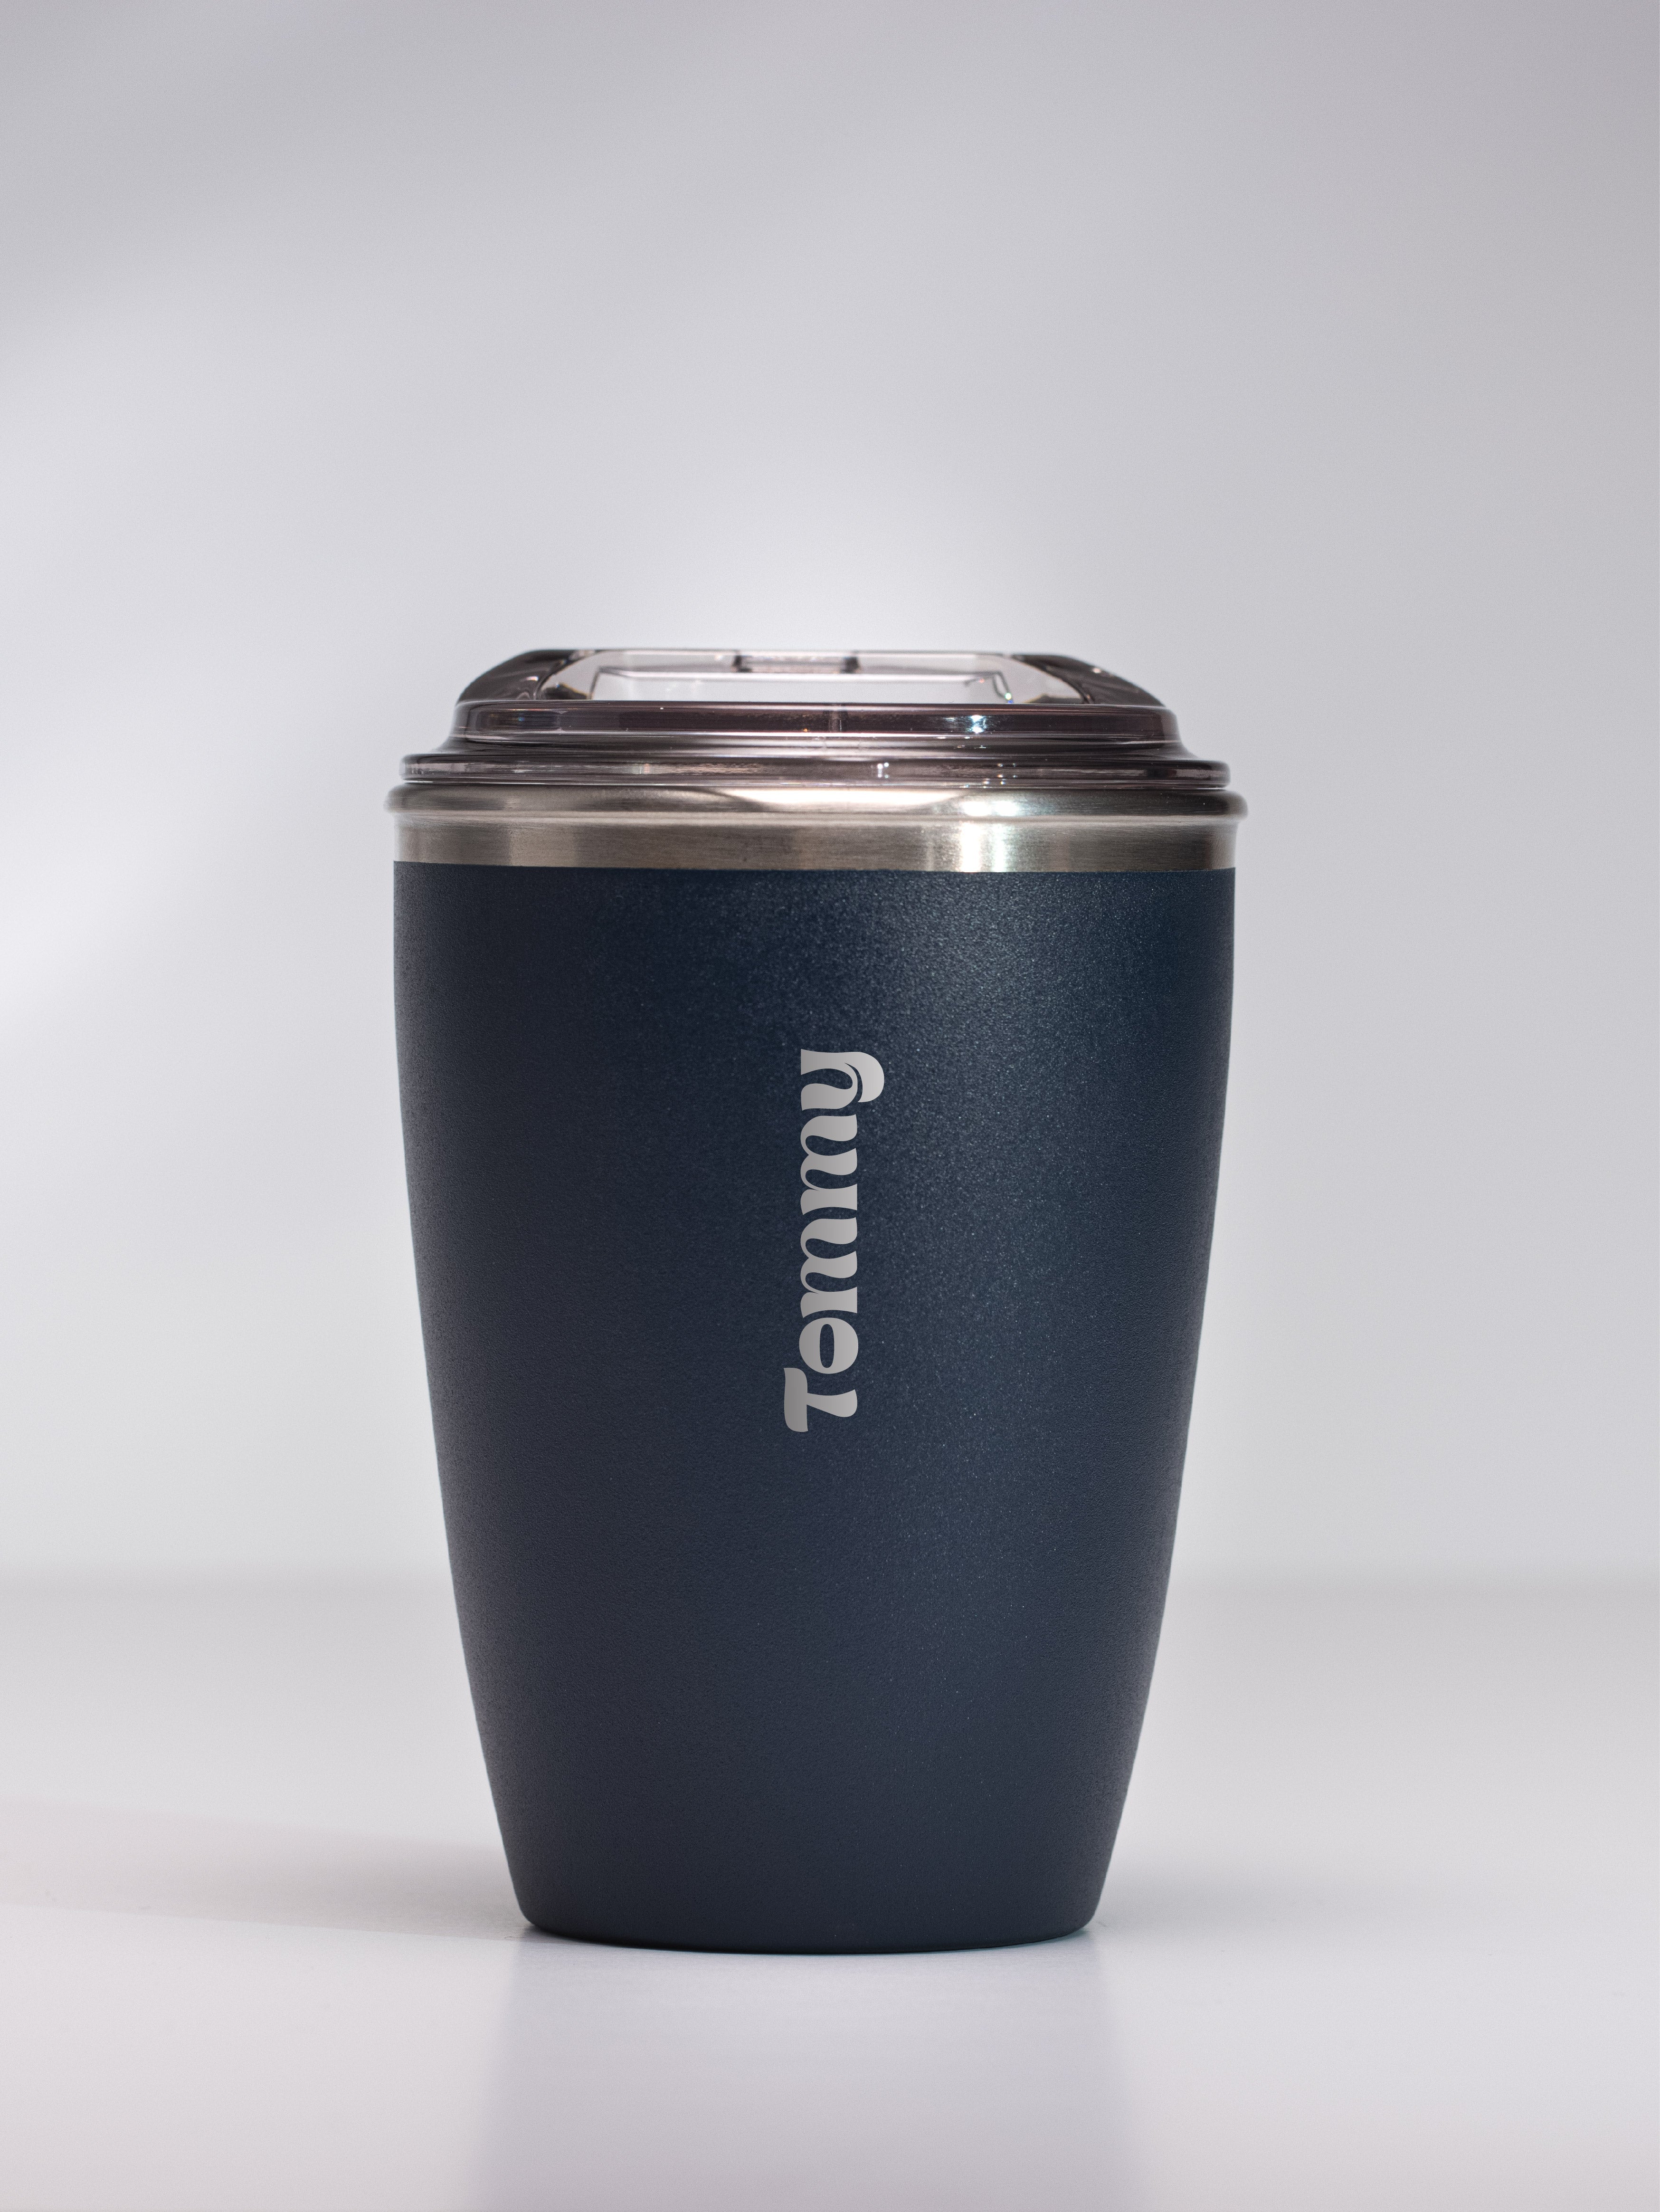 New Zealand's Bullet Travel Mug: Custom Stainless Steel Cup